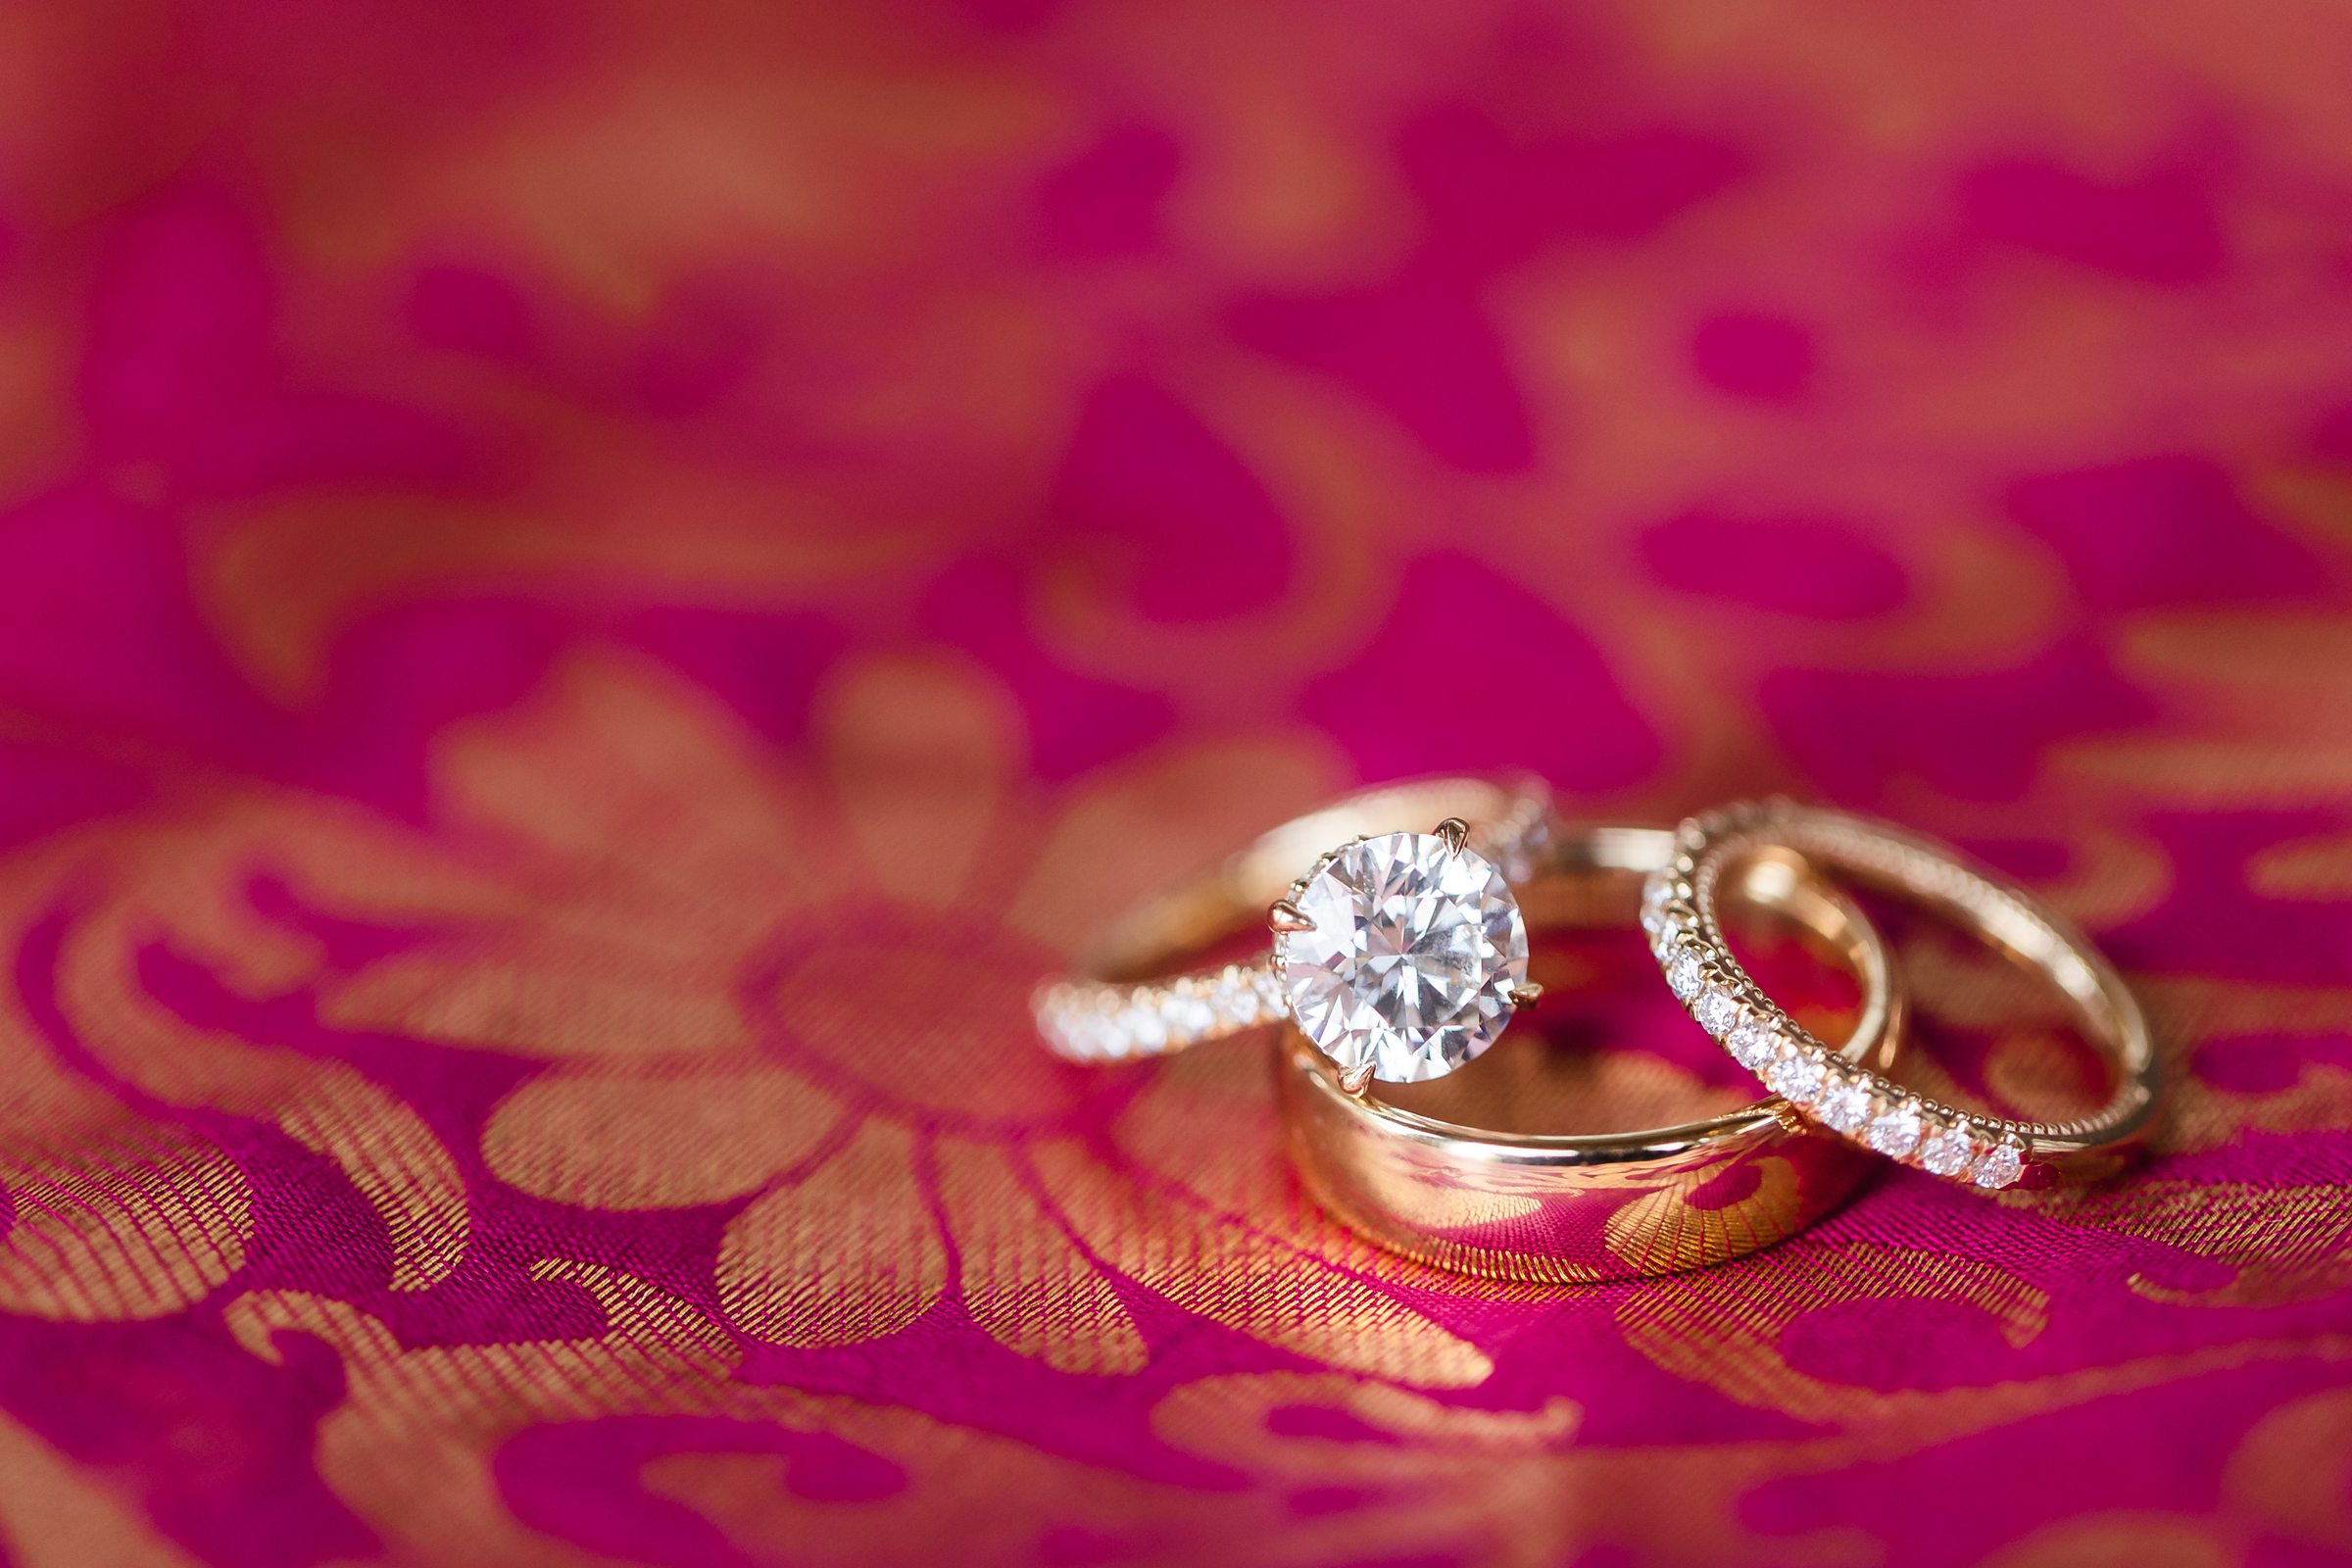 Wedding rings on display the Shiraz Garden Wedding Venue in Bastrop, Texas.